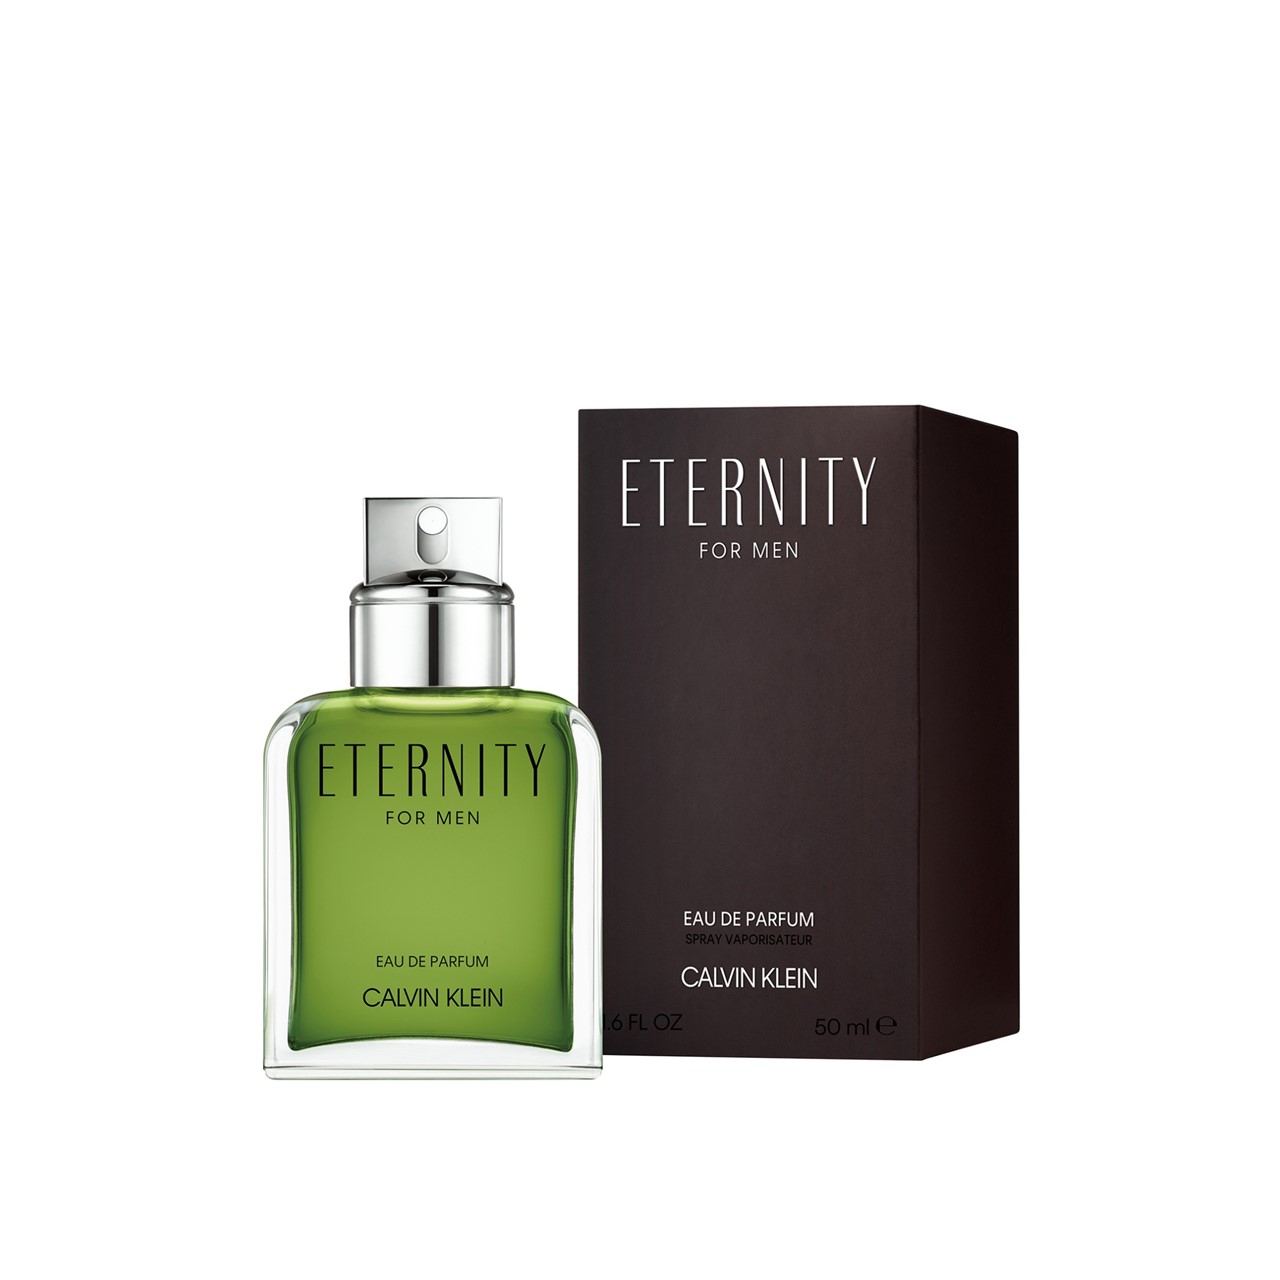 Buy Calvin Klein Eternity For · 50ml USA oz) Parfum de Eau Men (1.7fl